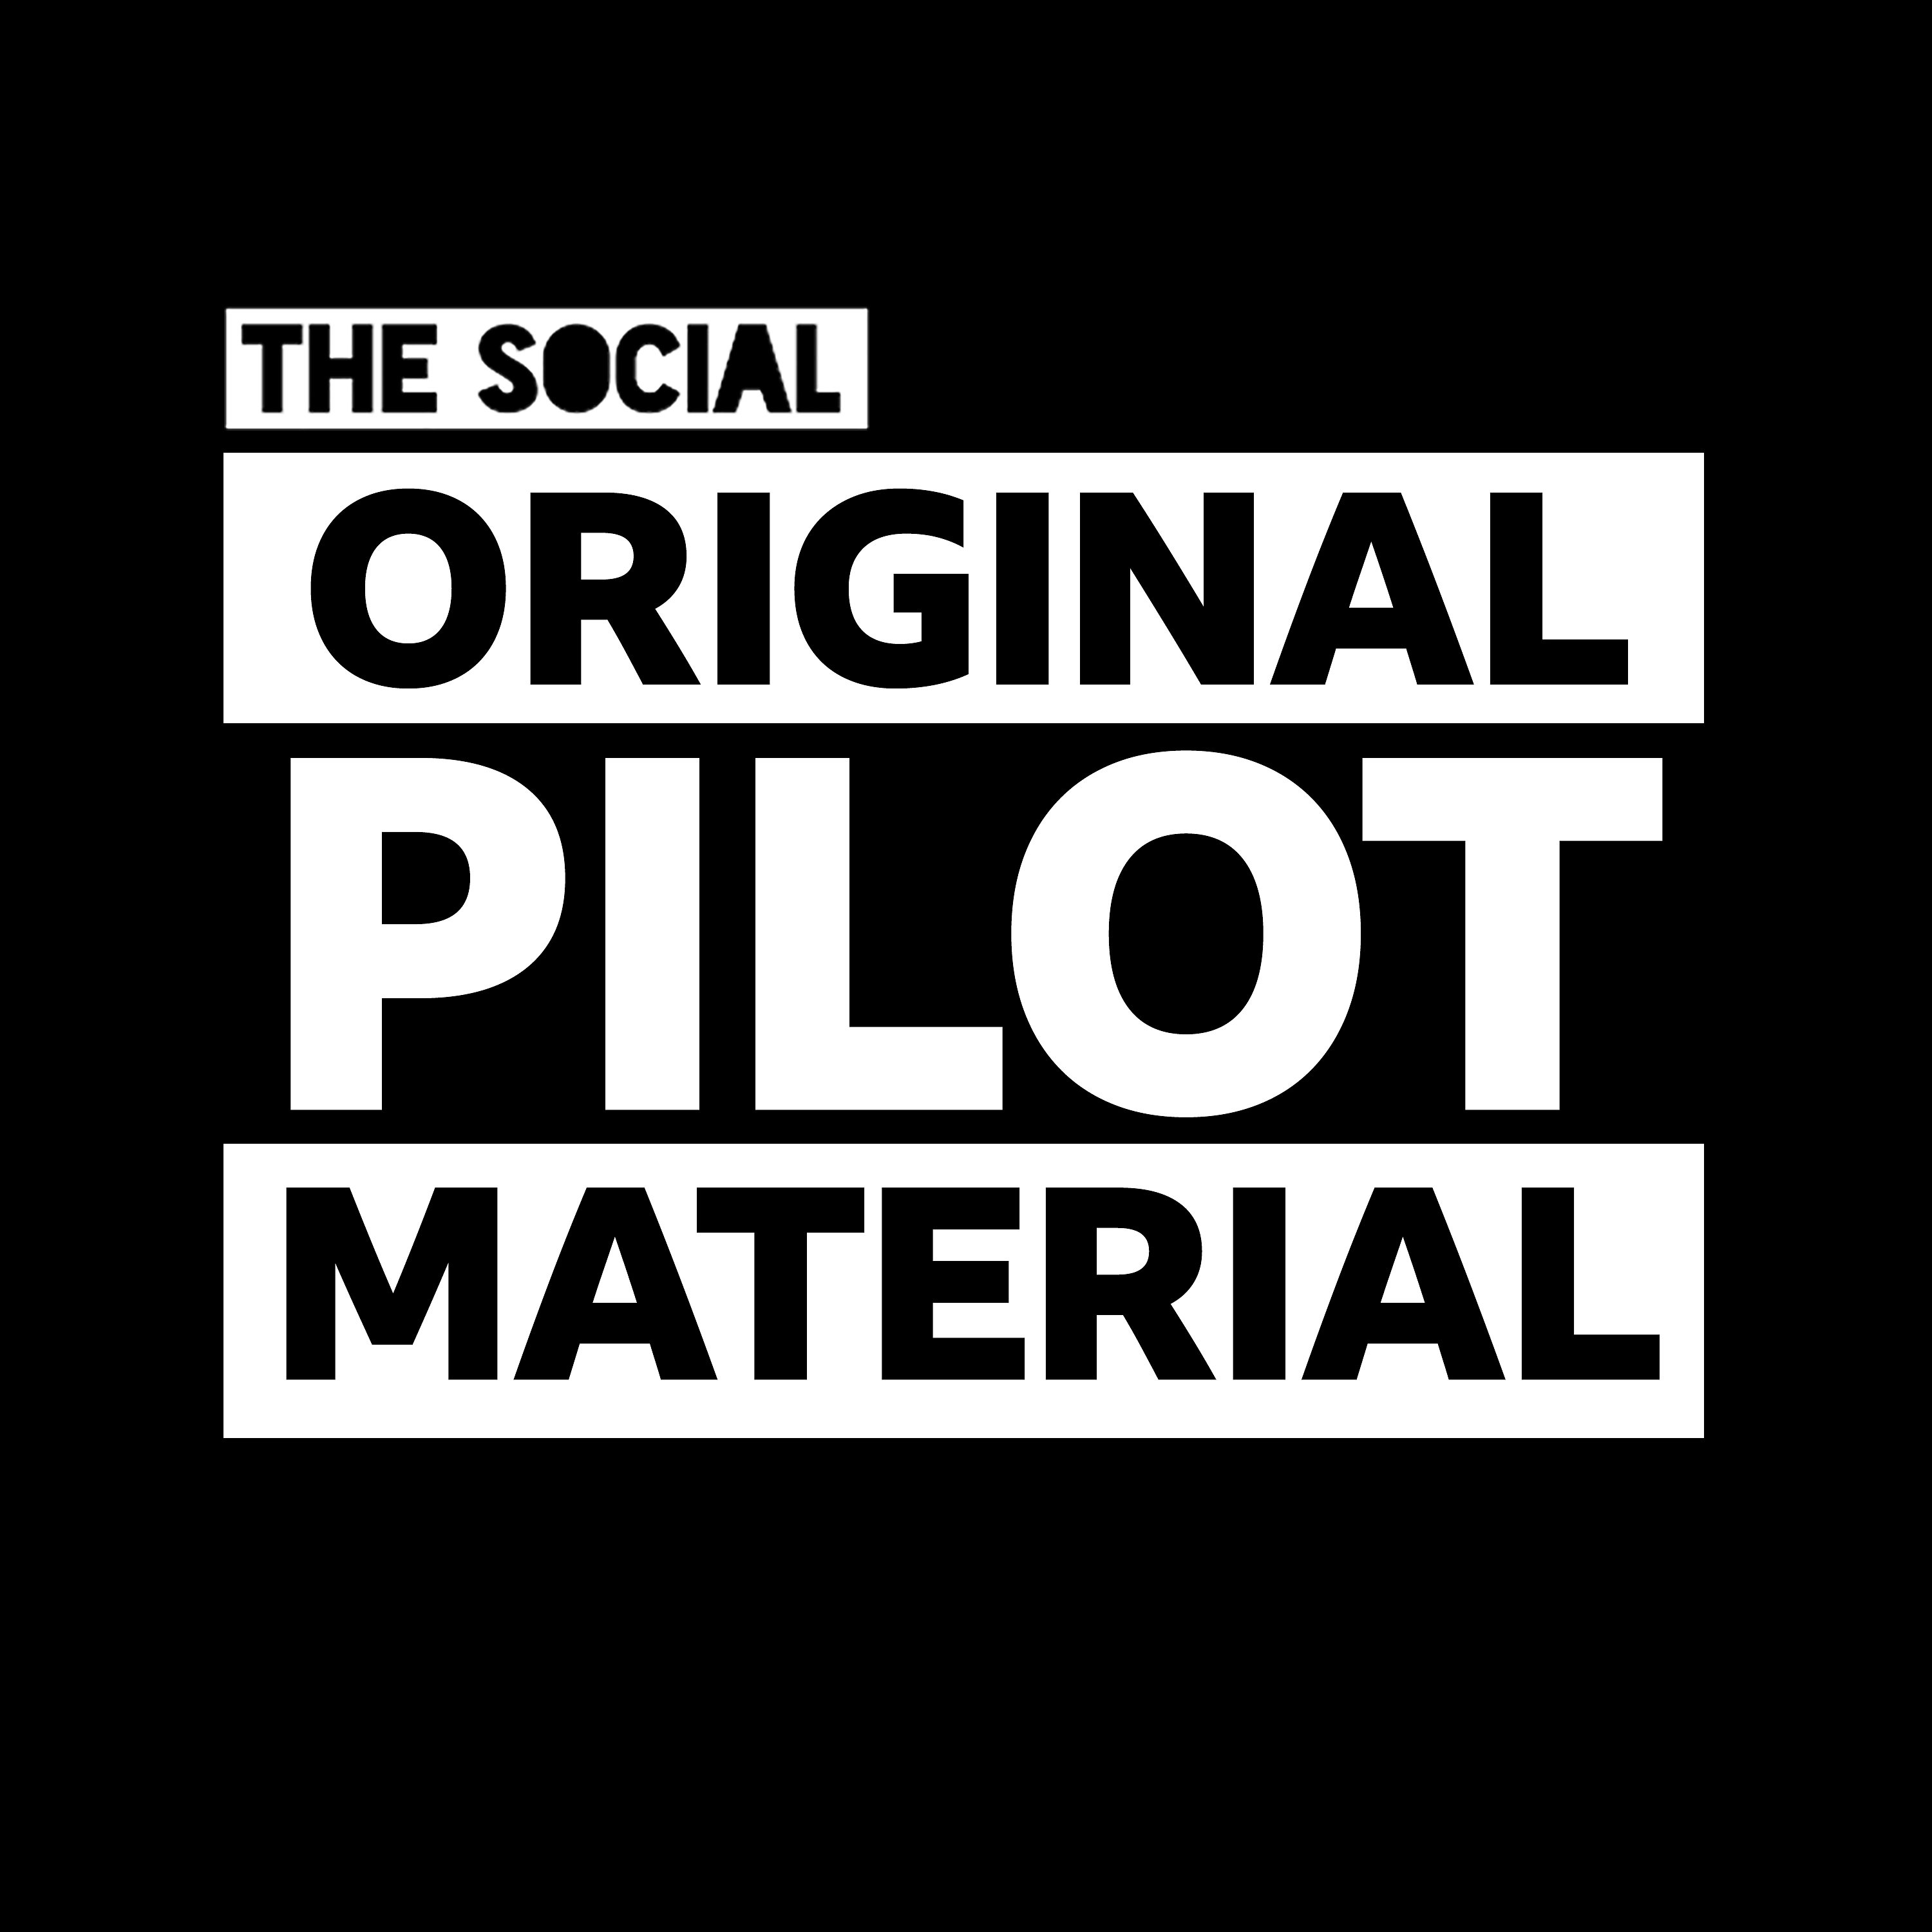 Original Pilot Material...from The Social